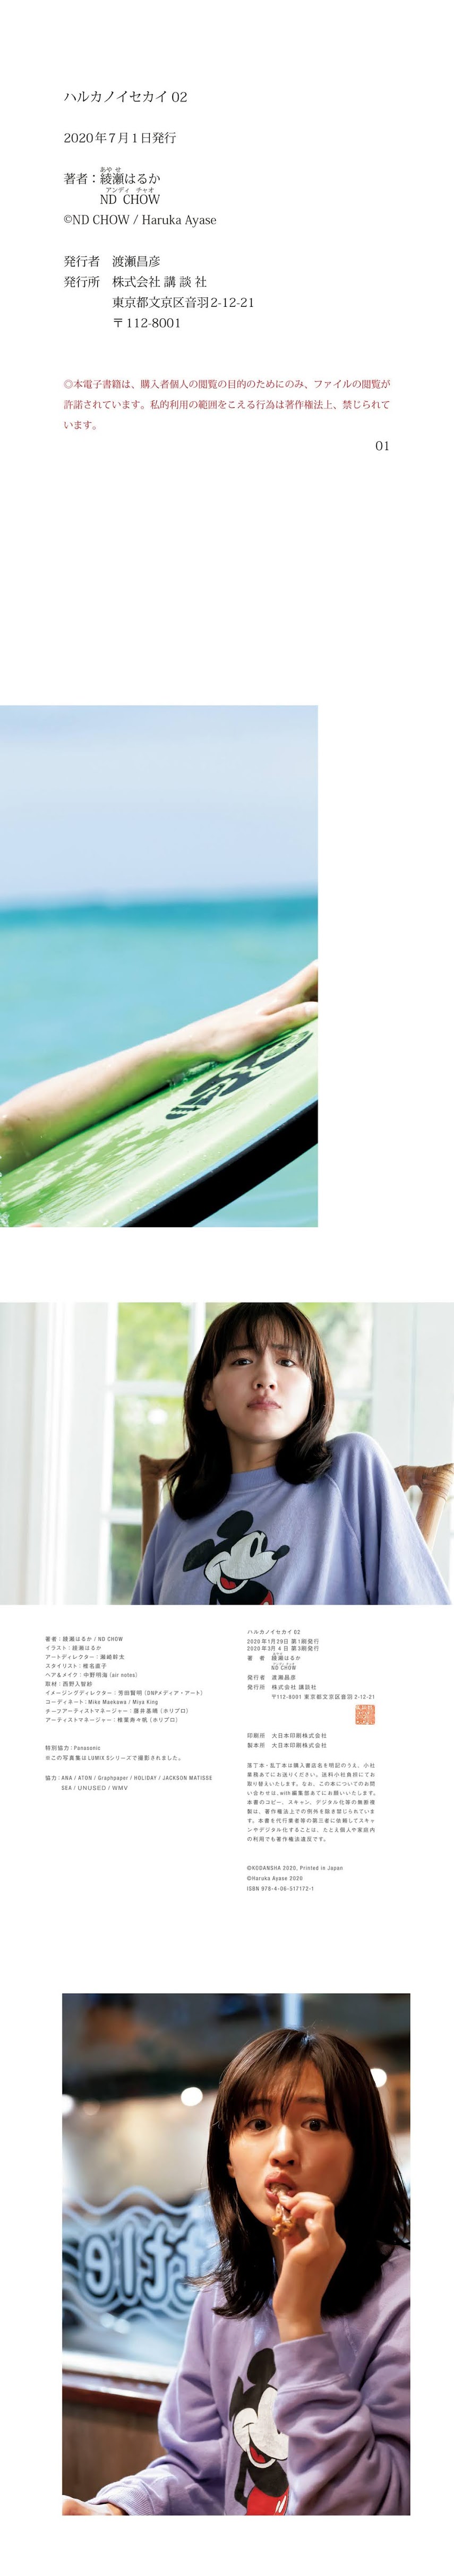 [Photobook] Haruka Ayase 绫濑遥 - Haruka no Isekai ハルカノイセカイ 02 (2020-01-31)   P214684 photobook 12190 